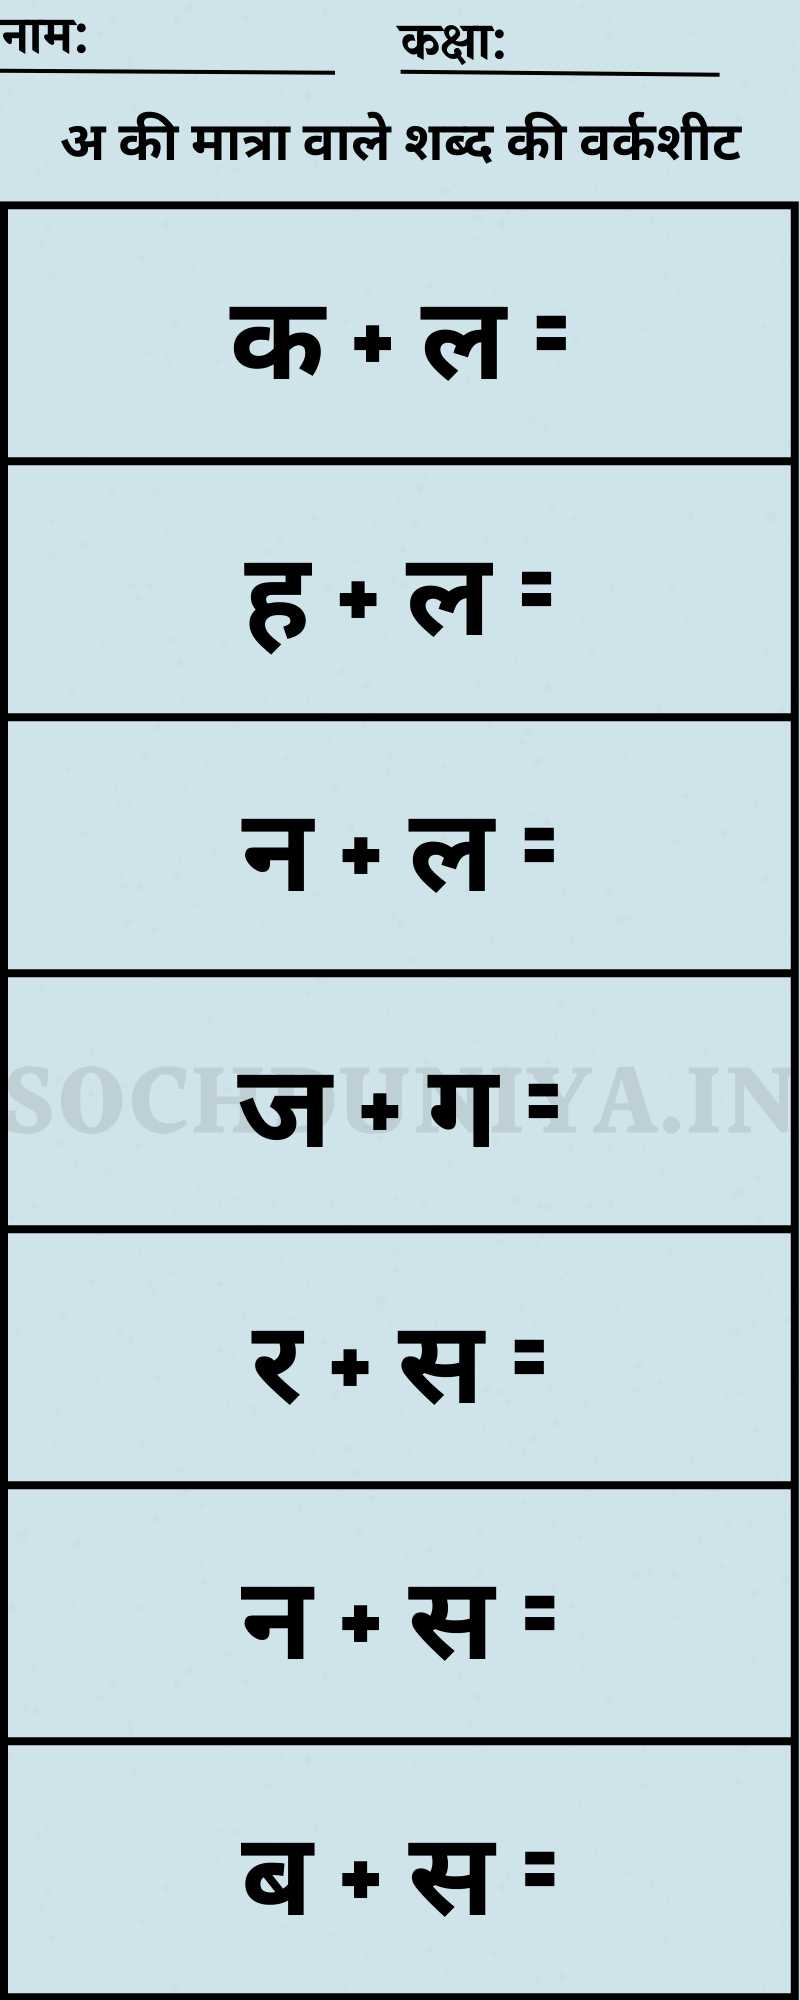 A Ki Matra Wale Shabd Worksheet PDF in Hindi